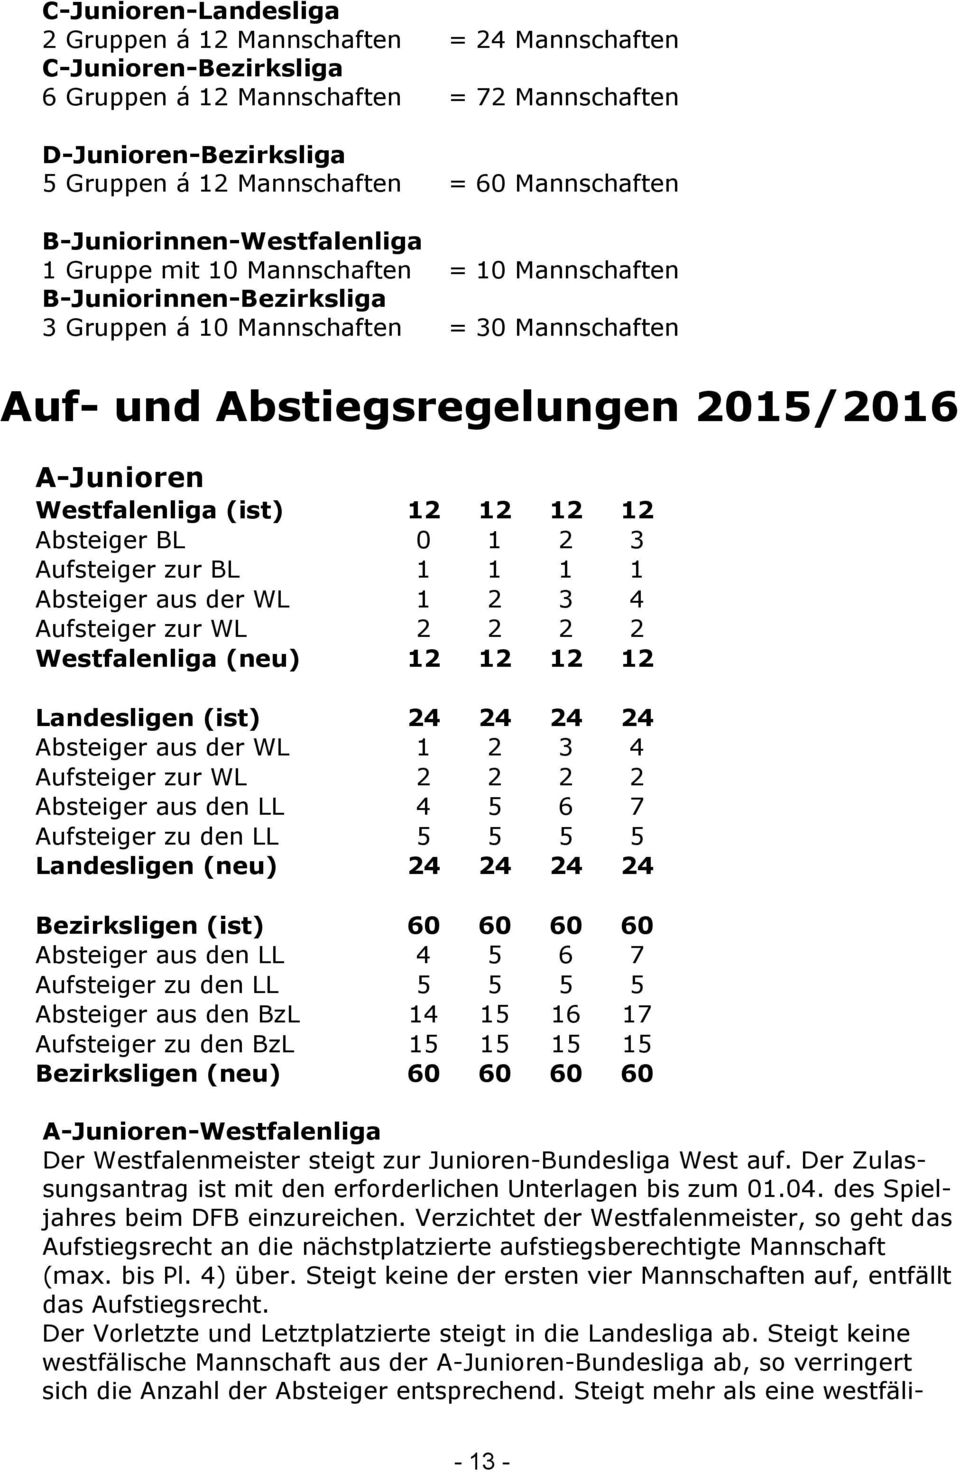 A-Junioren Westfalenliga (ist) 12 12 12 12 Absteiger BL 0 1 2 3 Aufsteiger zur BL 1 1 1 1 Absteiger aus der WL 1 2 3 4 Aufsteiger zur WL 2 2 2 2 Westfalenliga (neu) 12 12 12 12 Landesligen (ist) 24